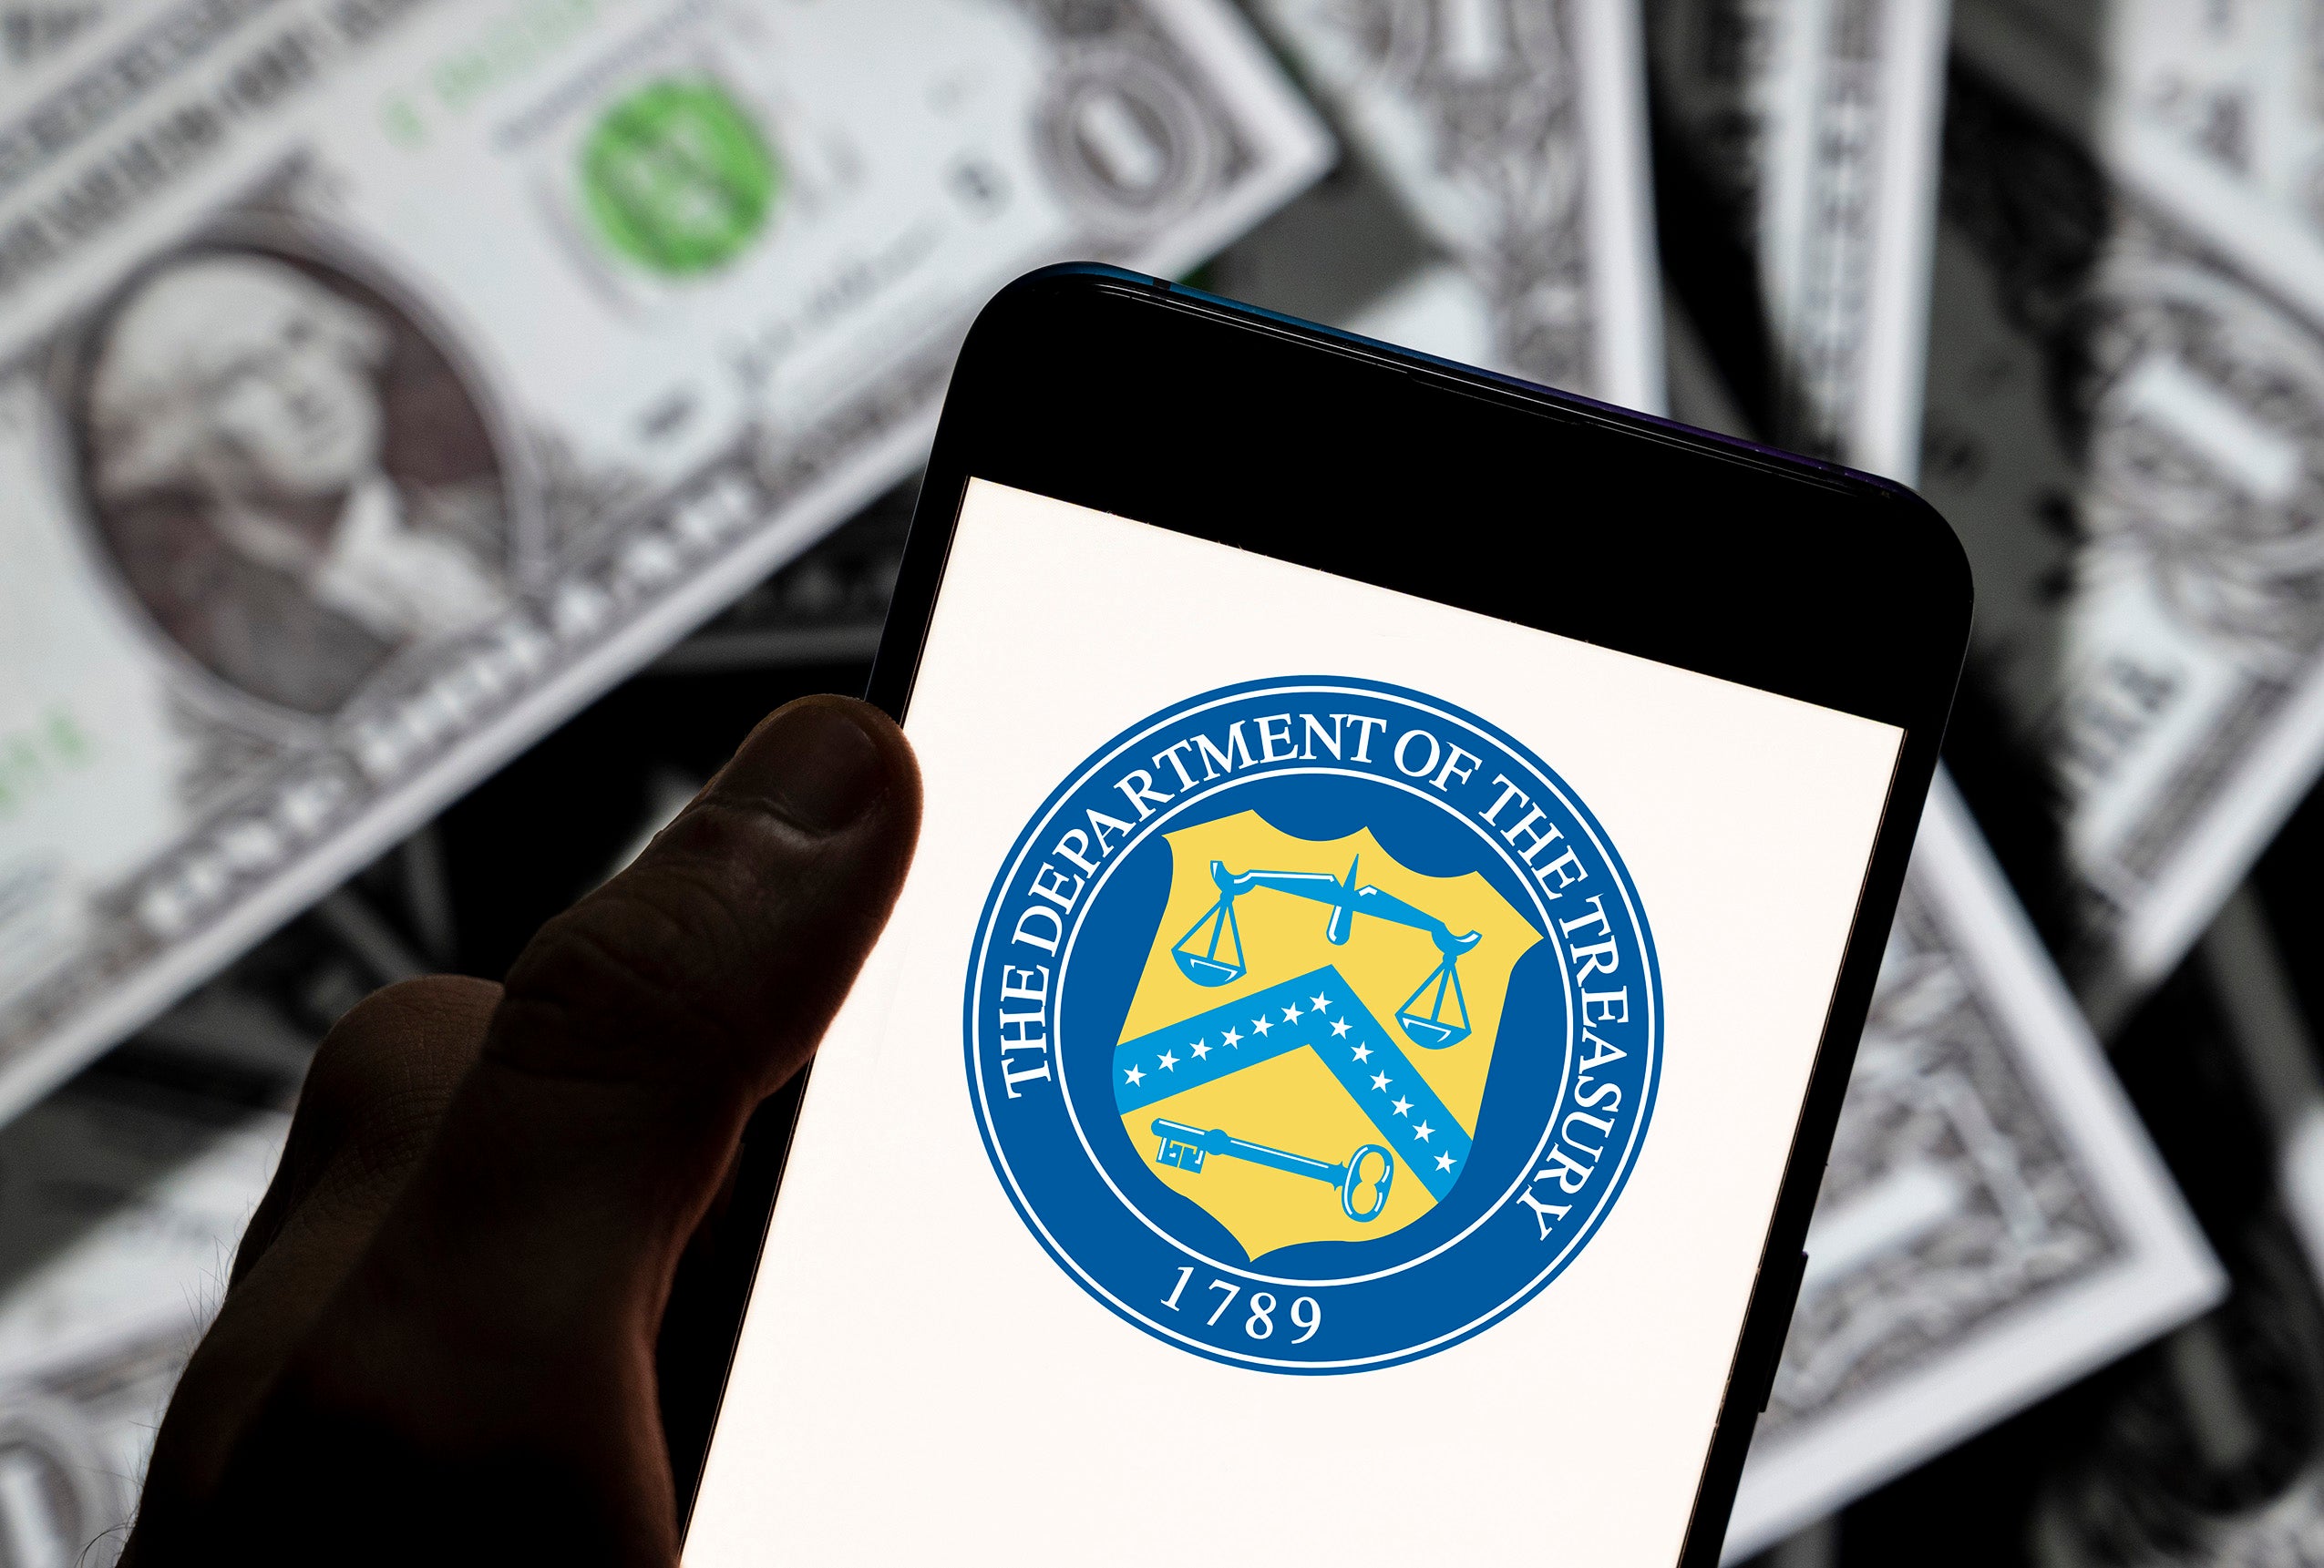 Photo illustration of U.S. Treasury Department seal on smartphone screen